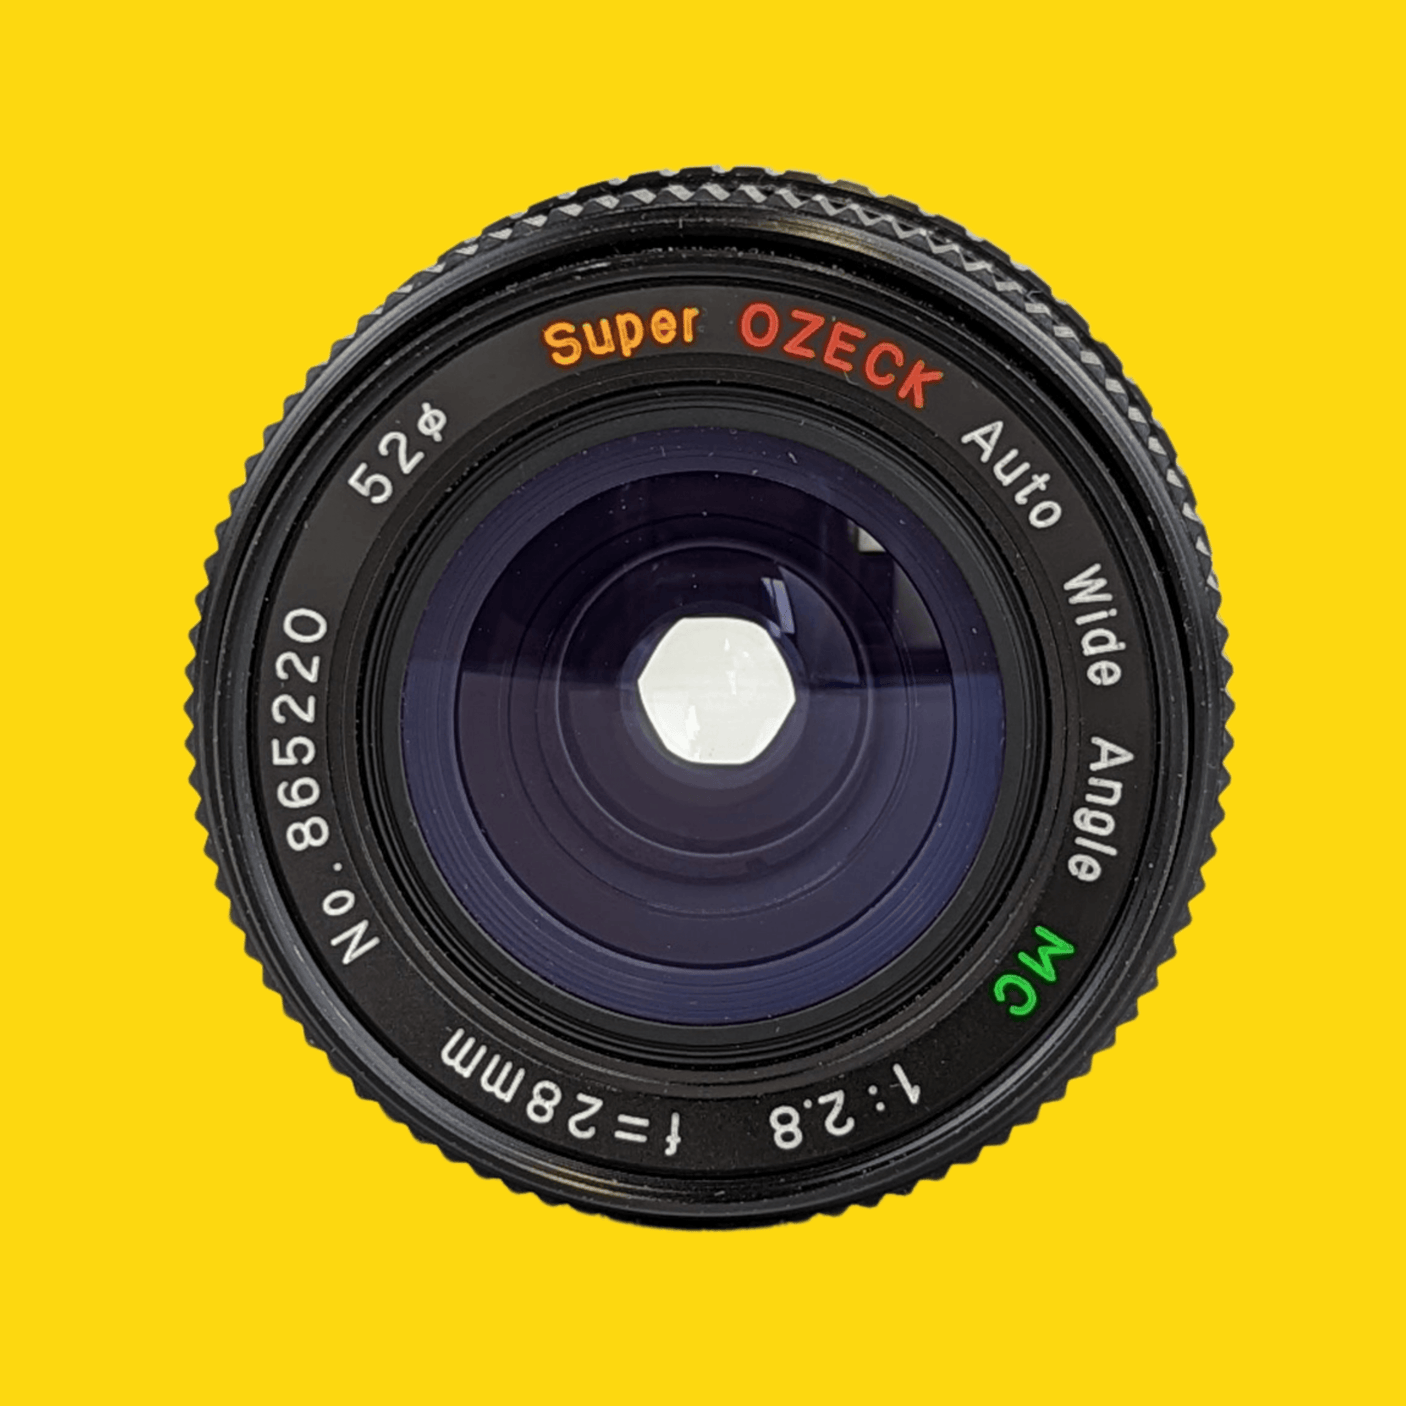 Super Ozeck Wide Angle 28mm f/2.8 Camera Lens